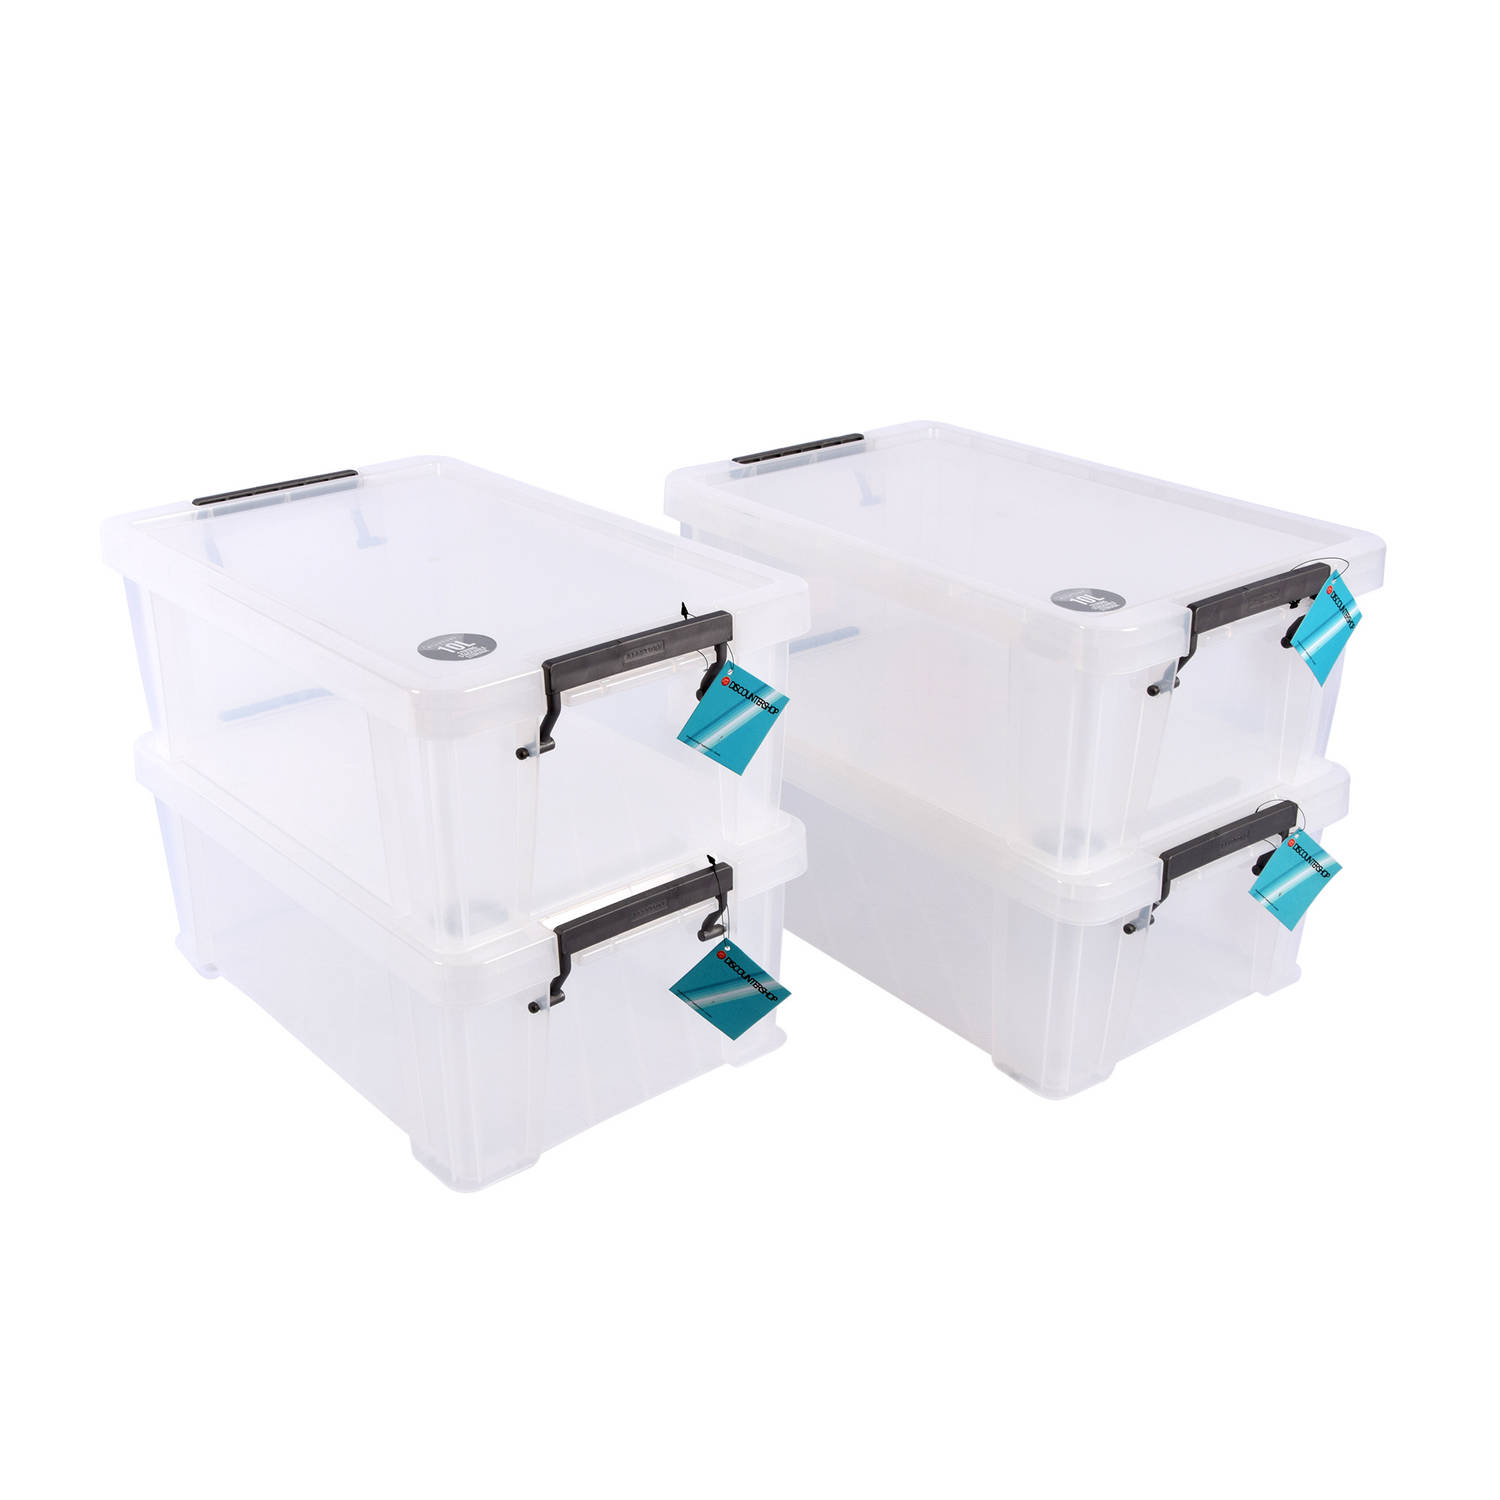 Opbergboxen Set van 4 - Kunststof Opslagboxen met Deksel Transparant Huishoud Organizers - 39.5cm x 25.5cm x 15cm - Klikdeksel - 10L Capaciteit per Stuk